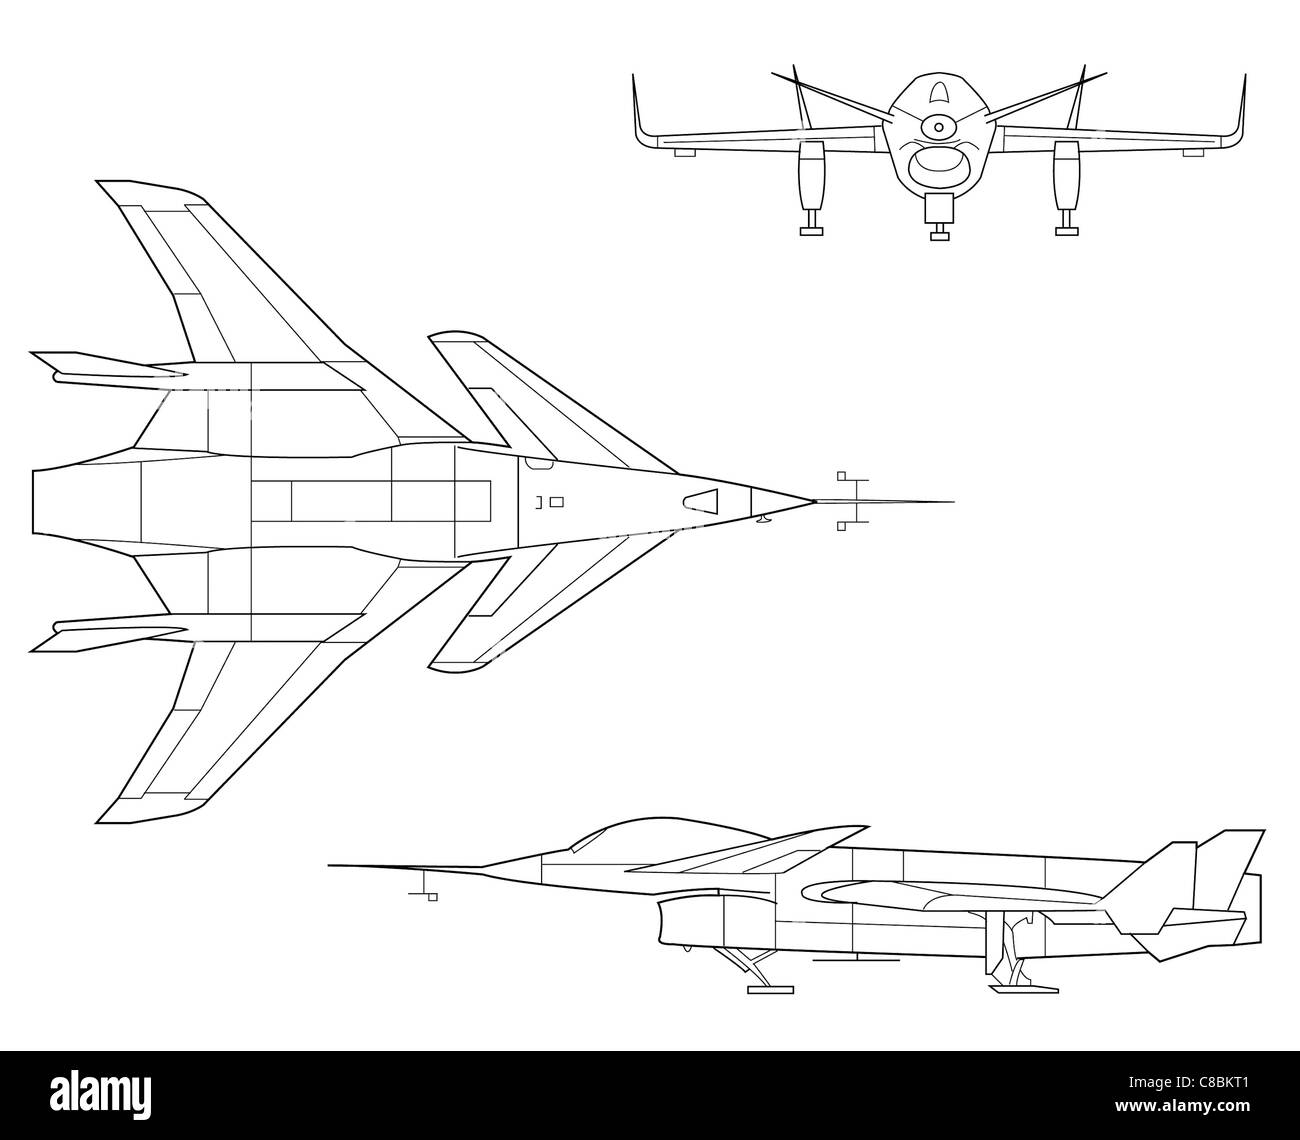 3 view aircraft line art drawing HiMAT RPV - Highly Maneuverable Aircraft Technology Stock Photo